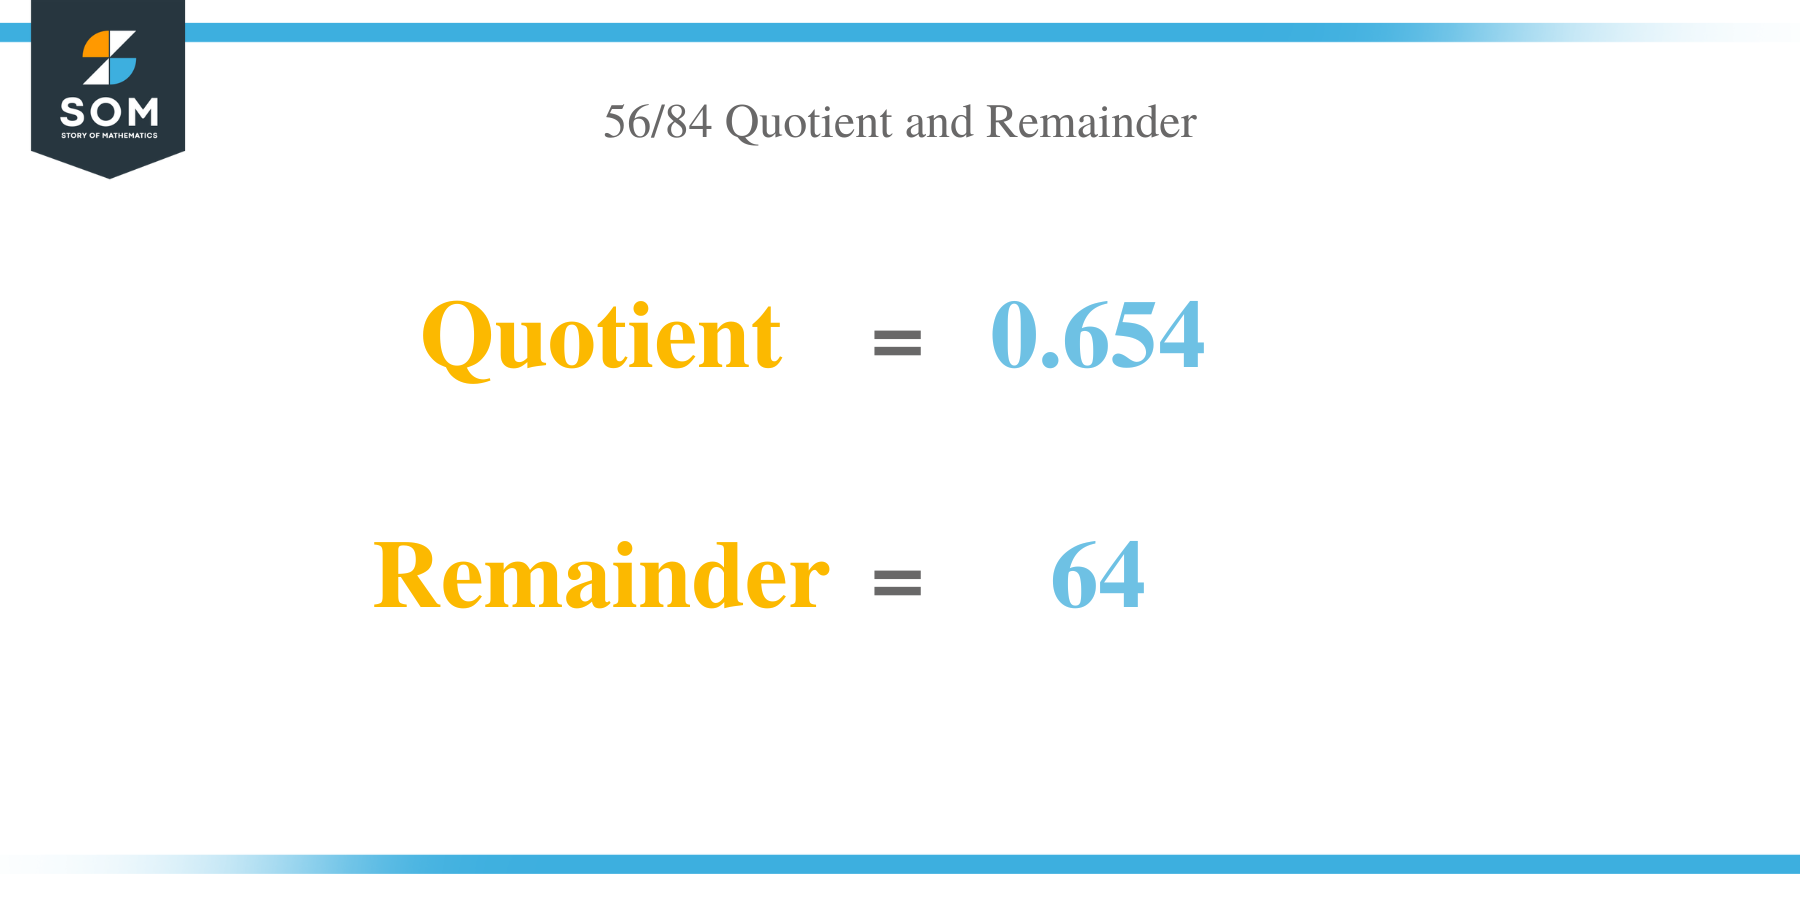 Quotient and Remainder of 55 per 84